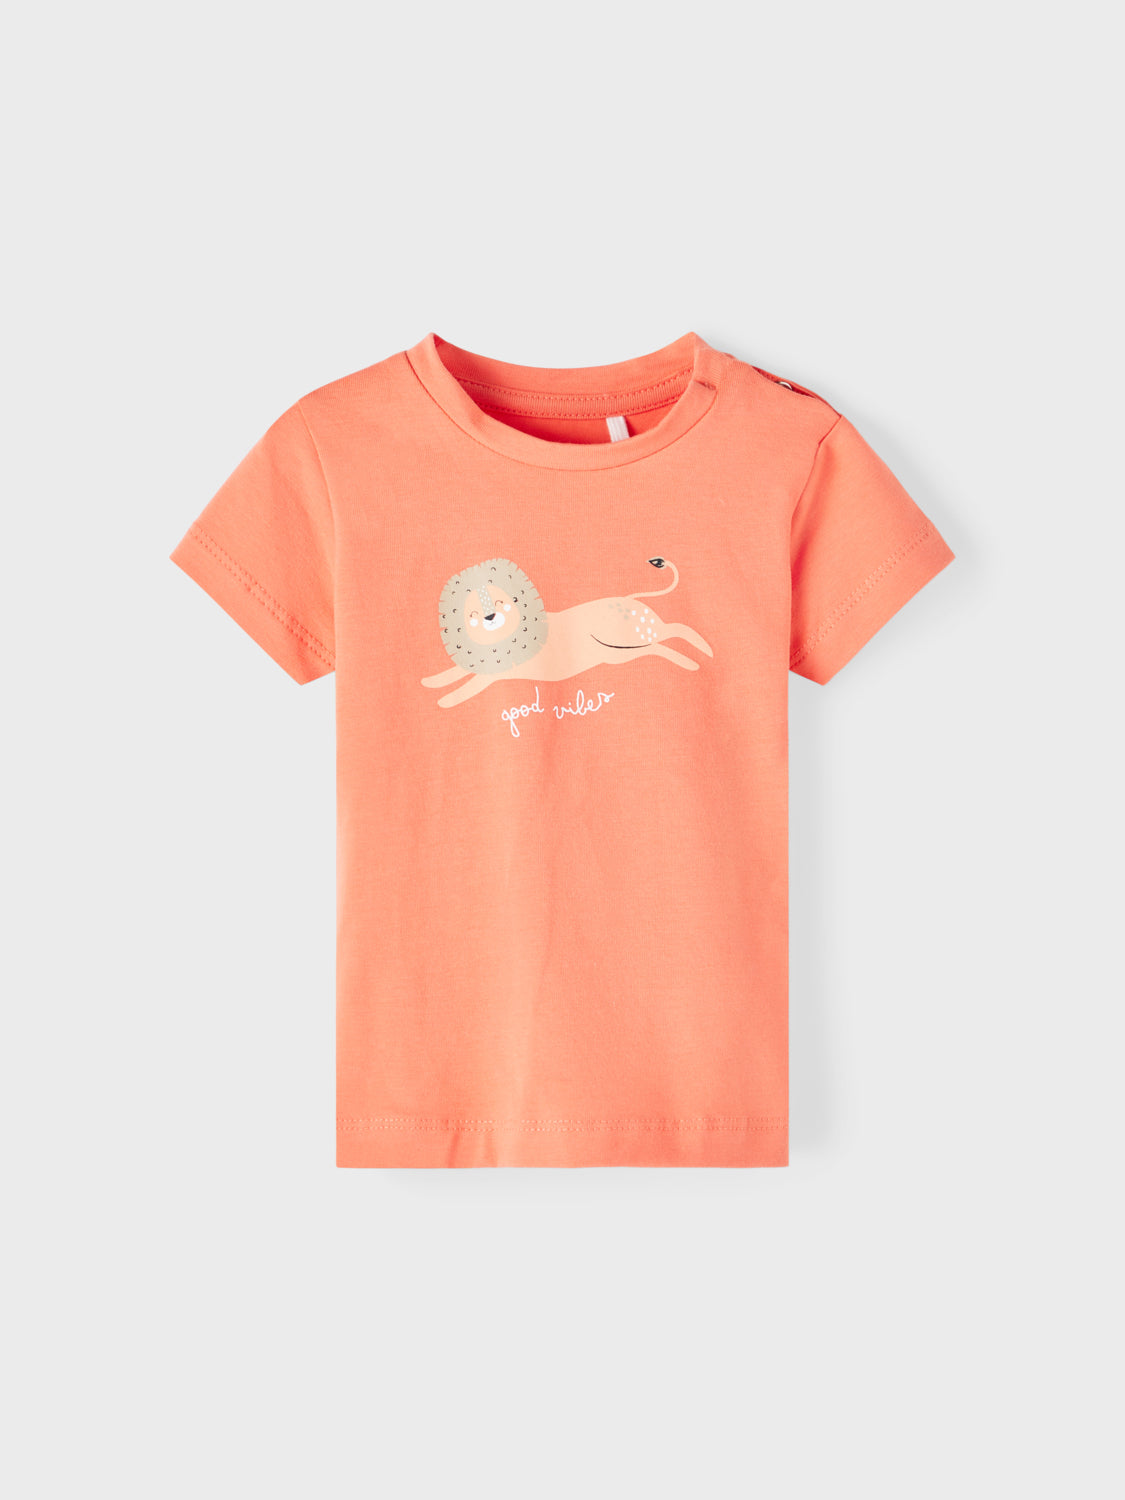 NBMFUNO T-Shirts & Tops - Coral